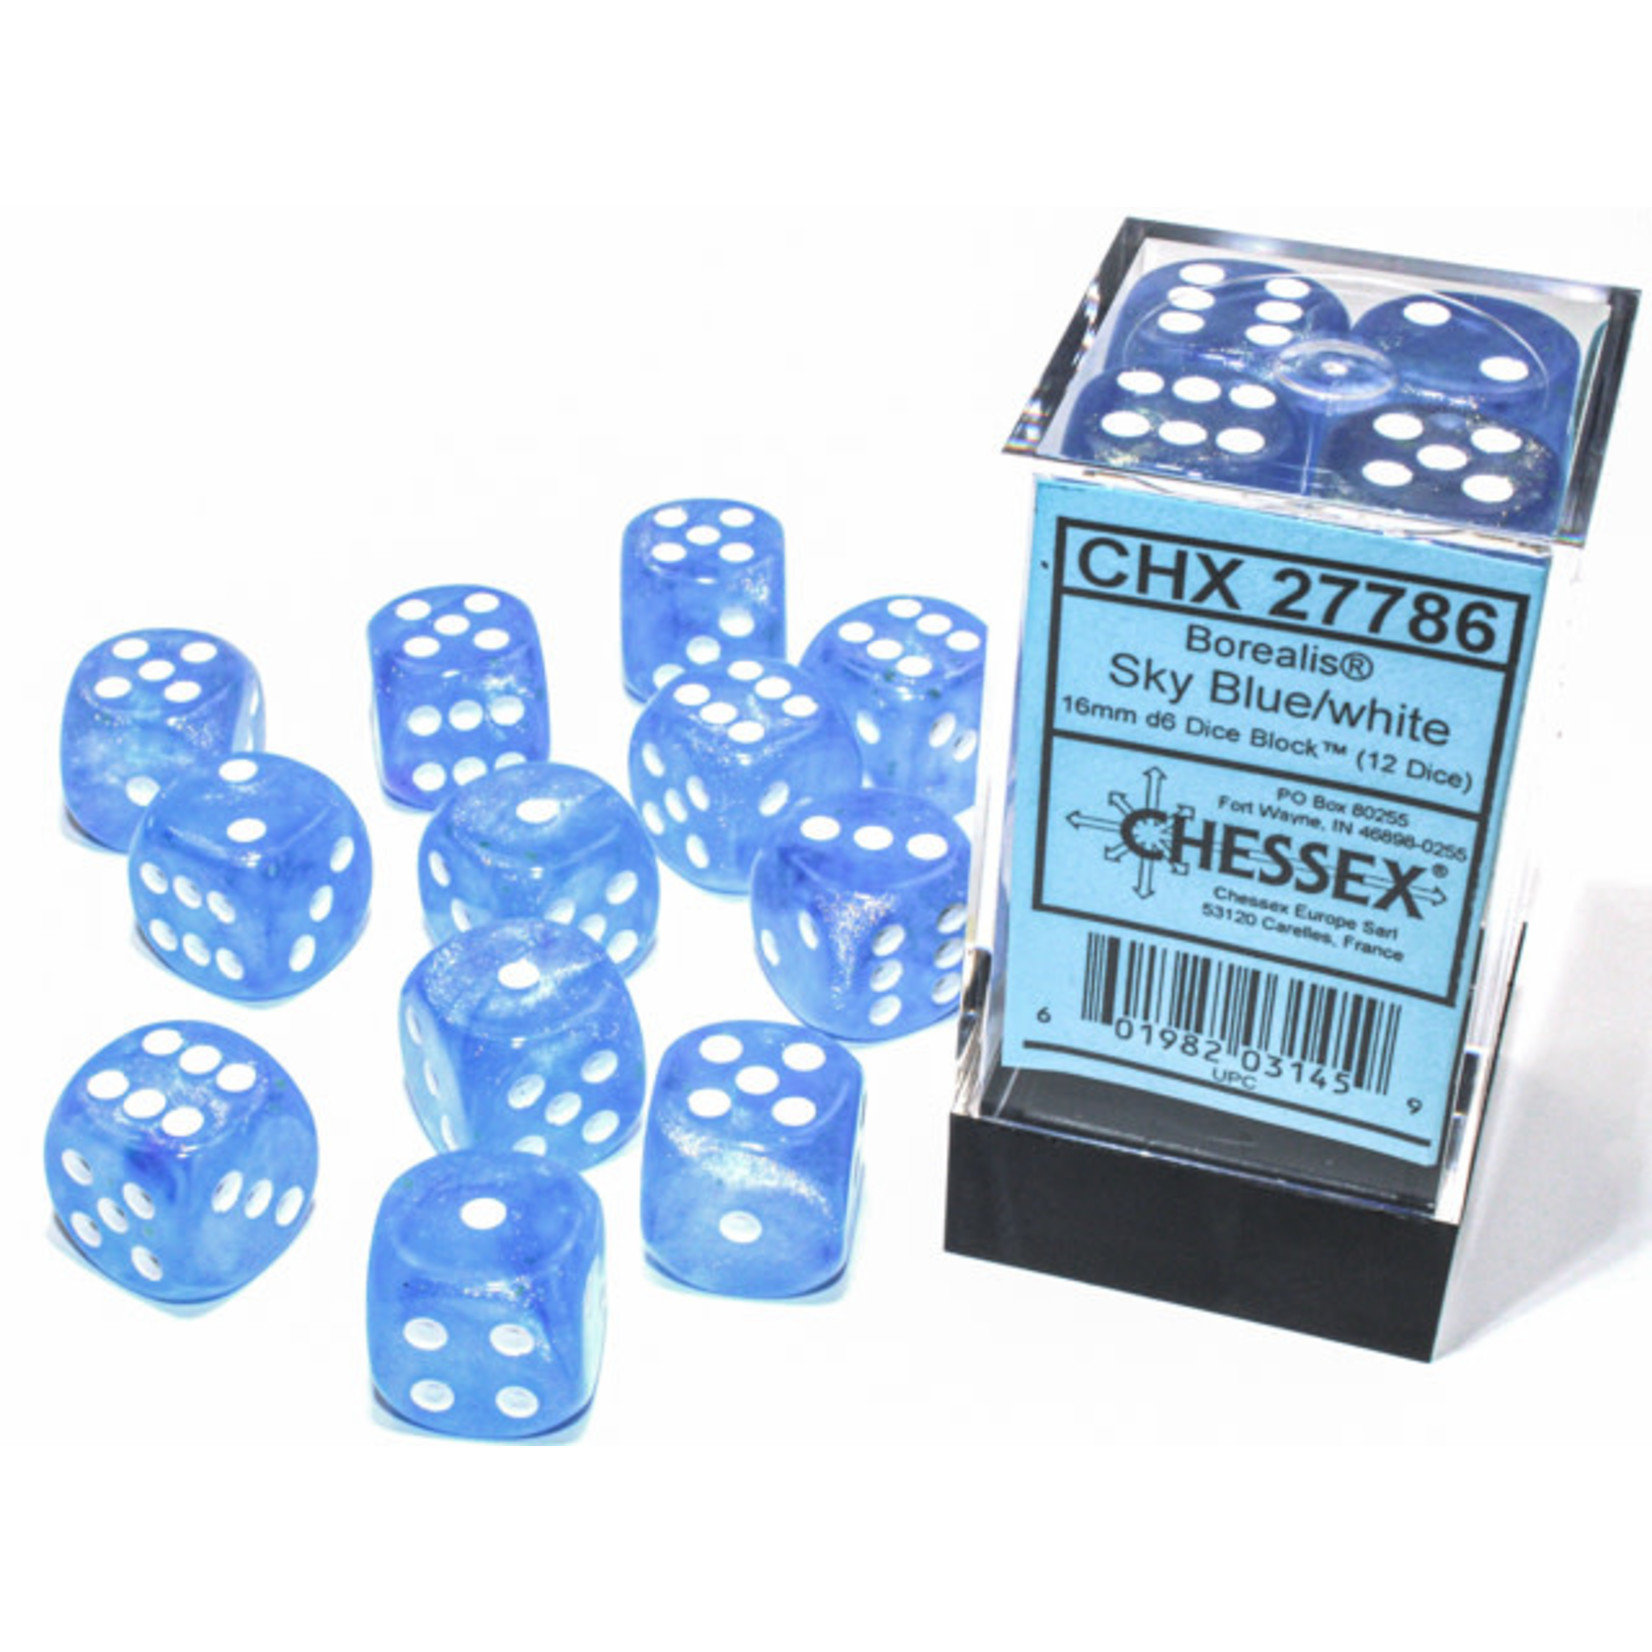 chessex Chessex Dice Borealis 12D6 Sky Blue/White